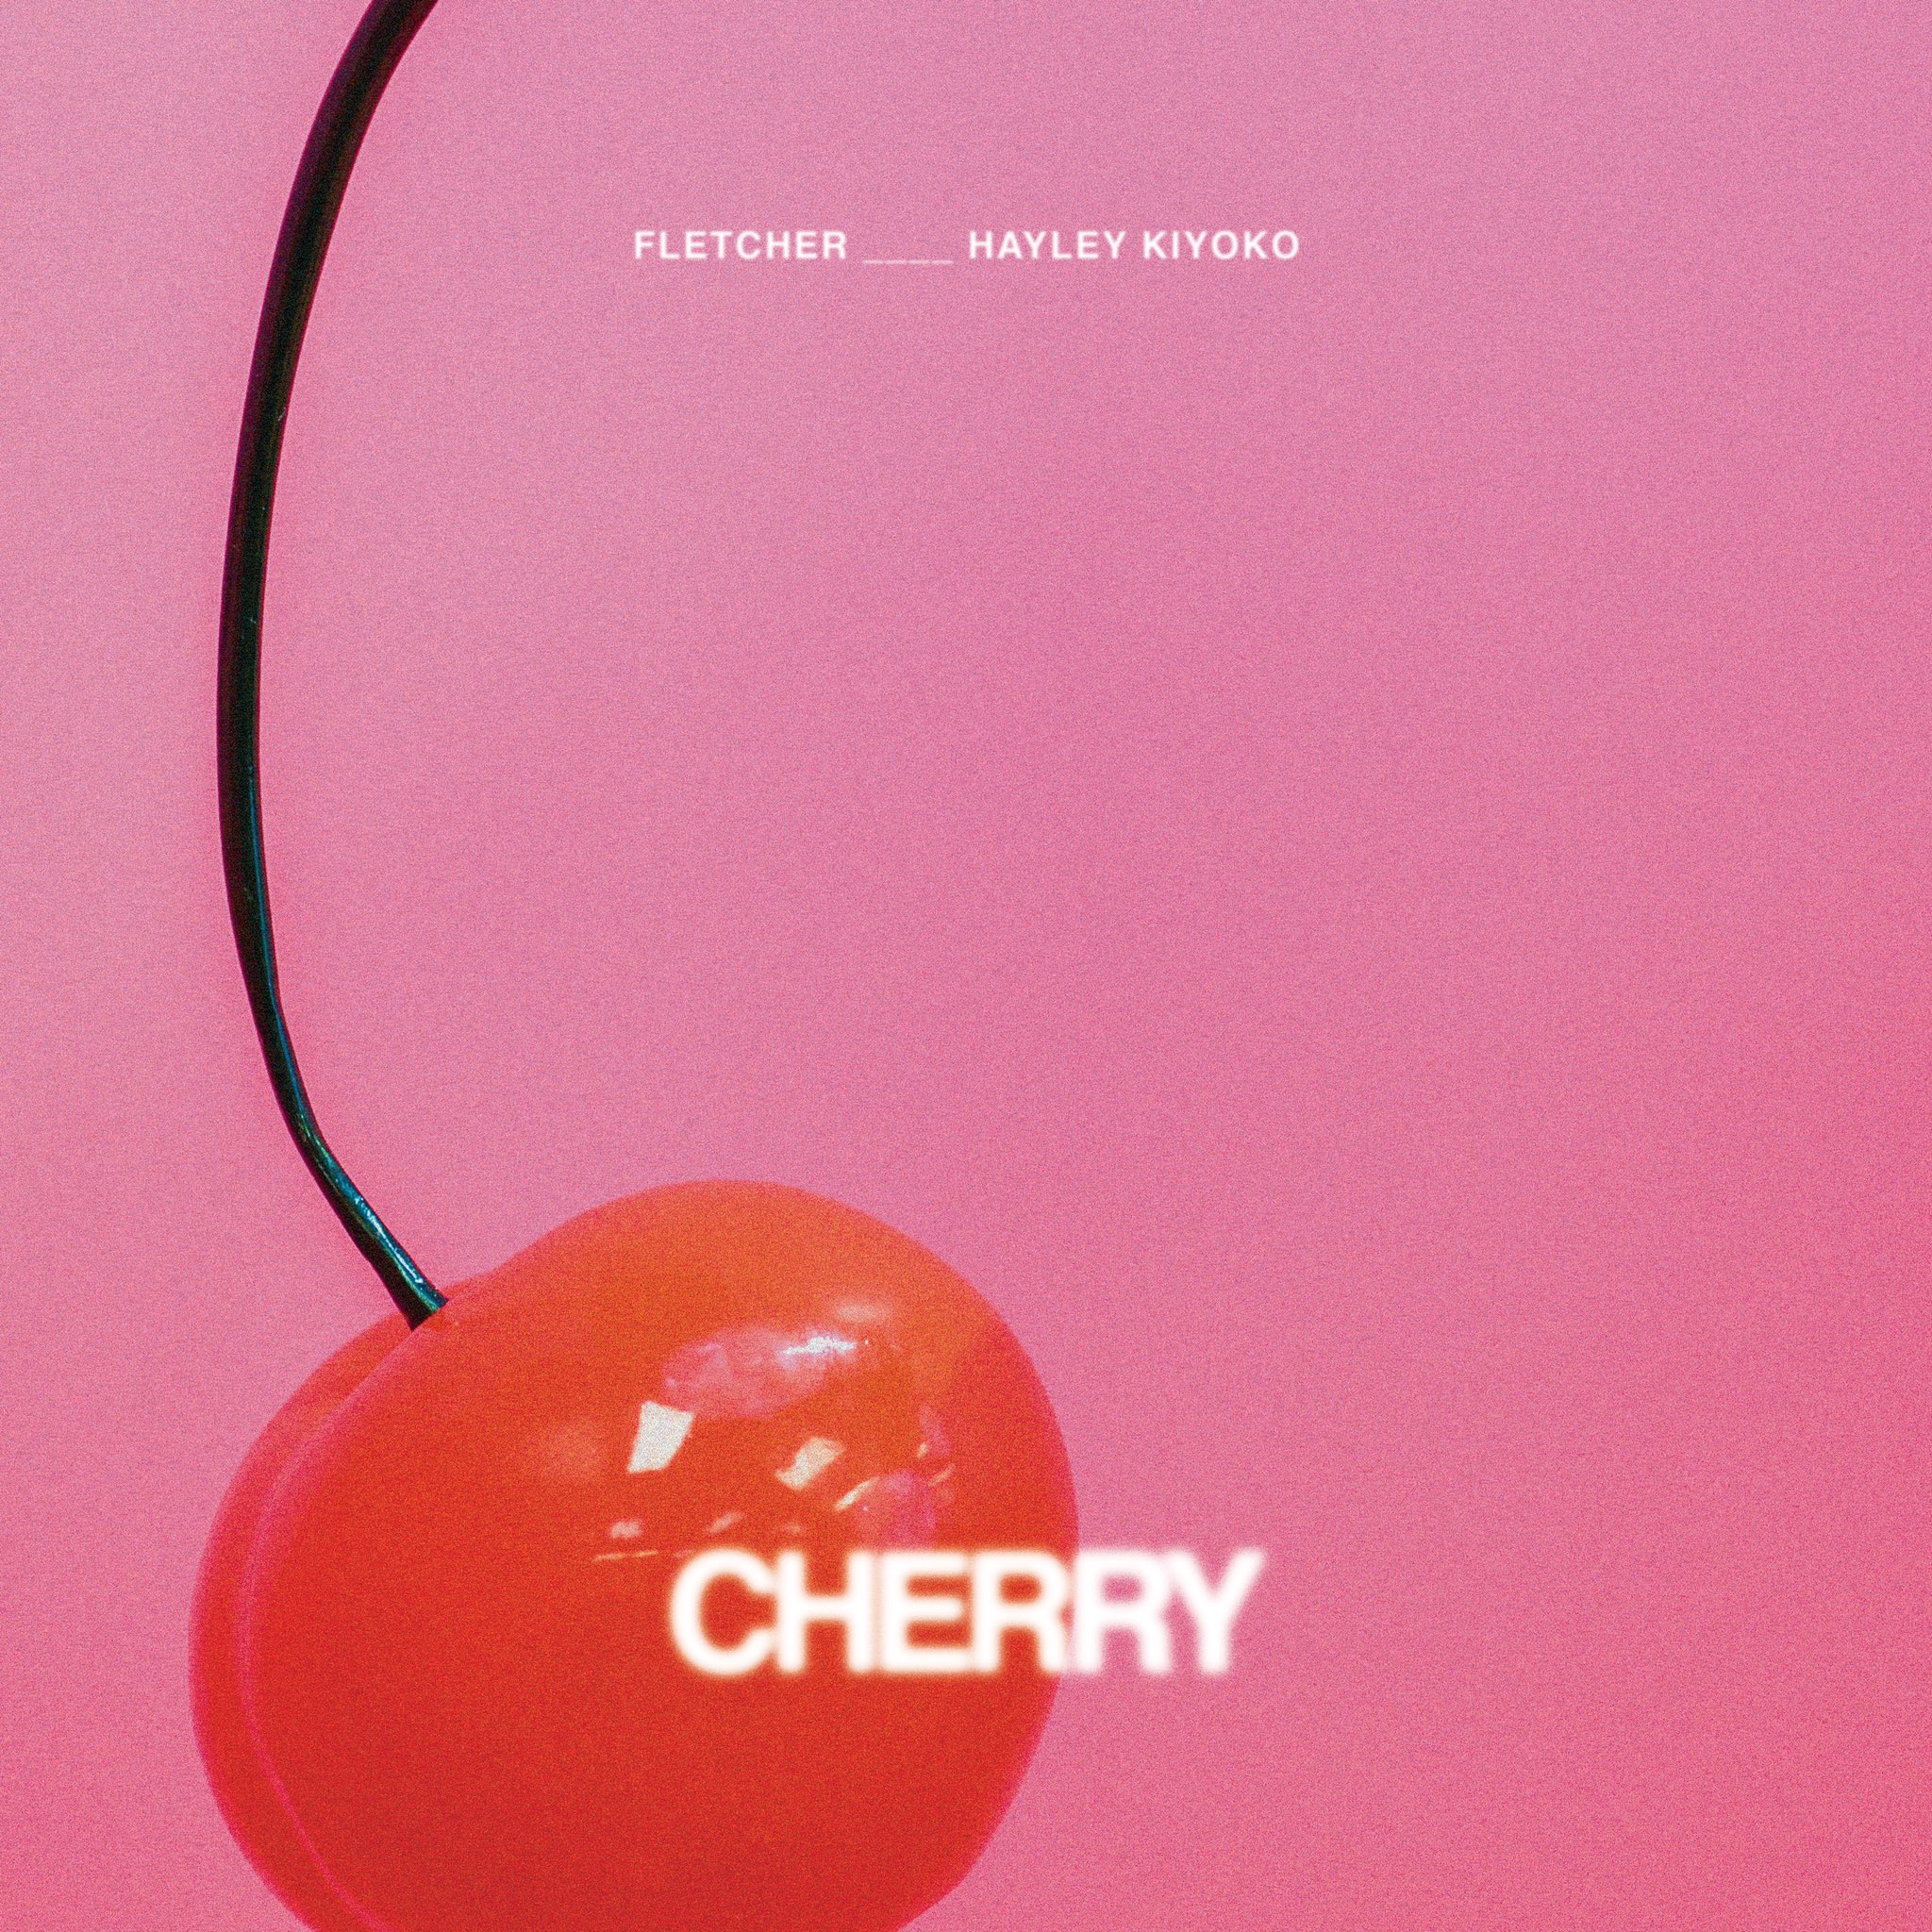 FLETCHER & Hayley Kiyoko — Cherry cover artwork